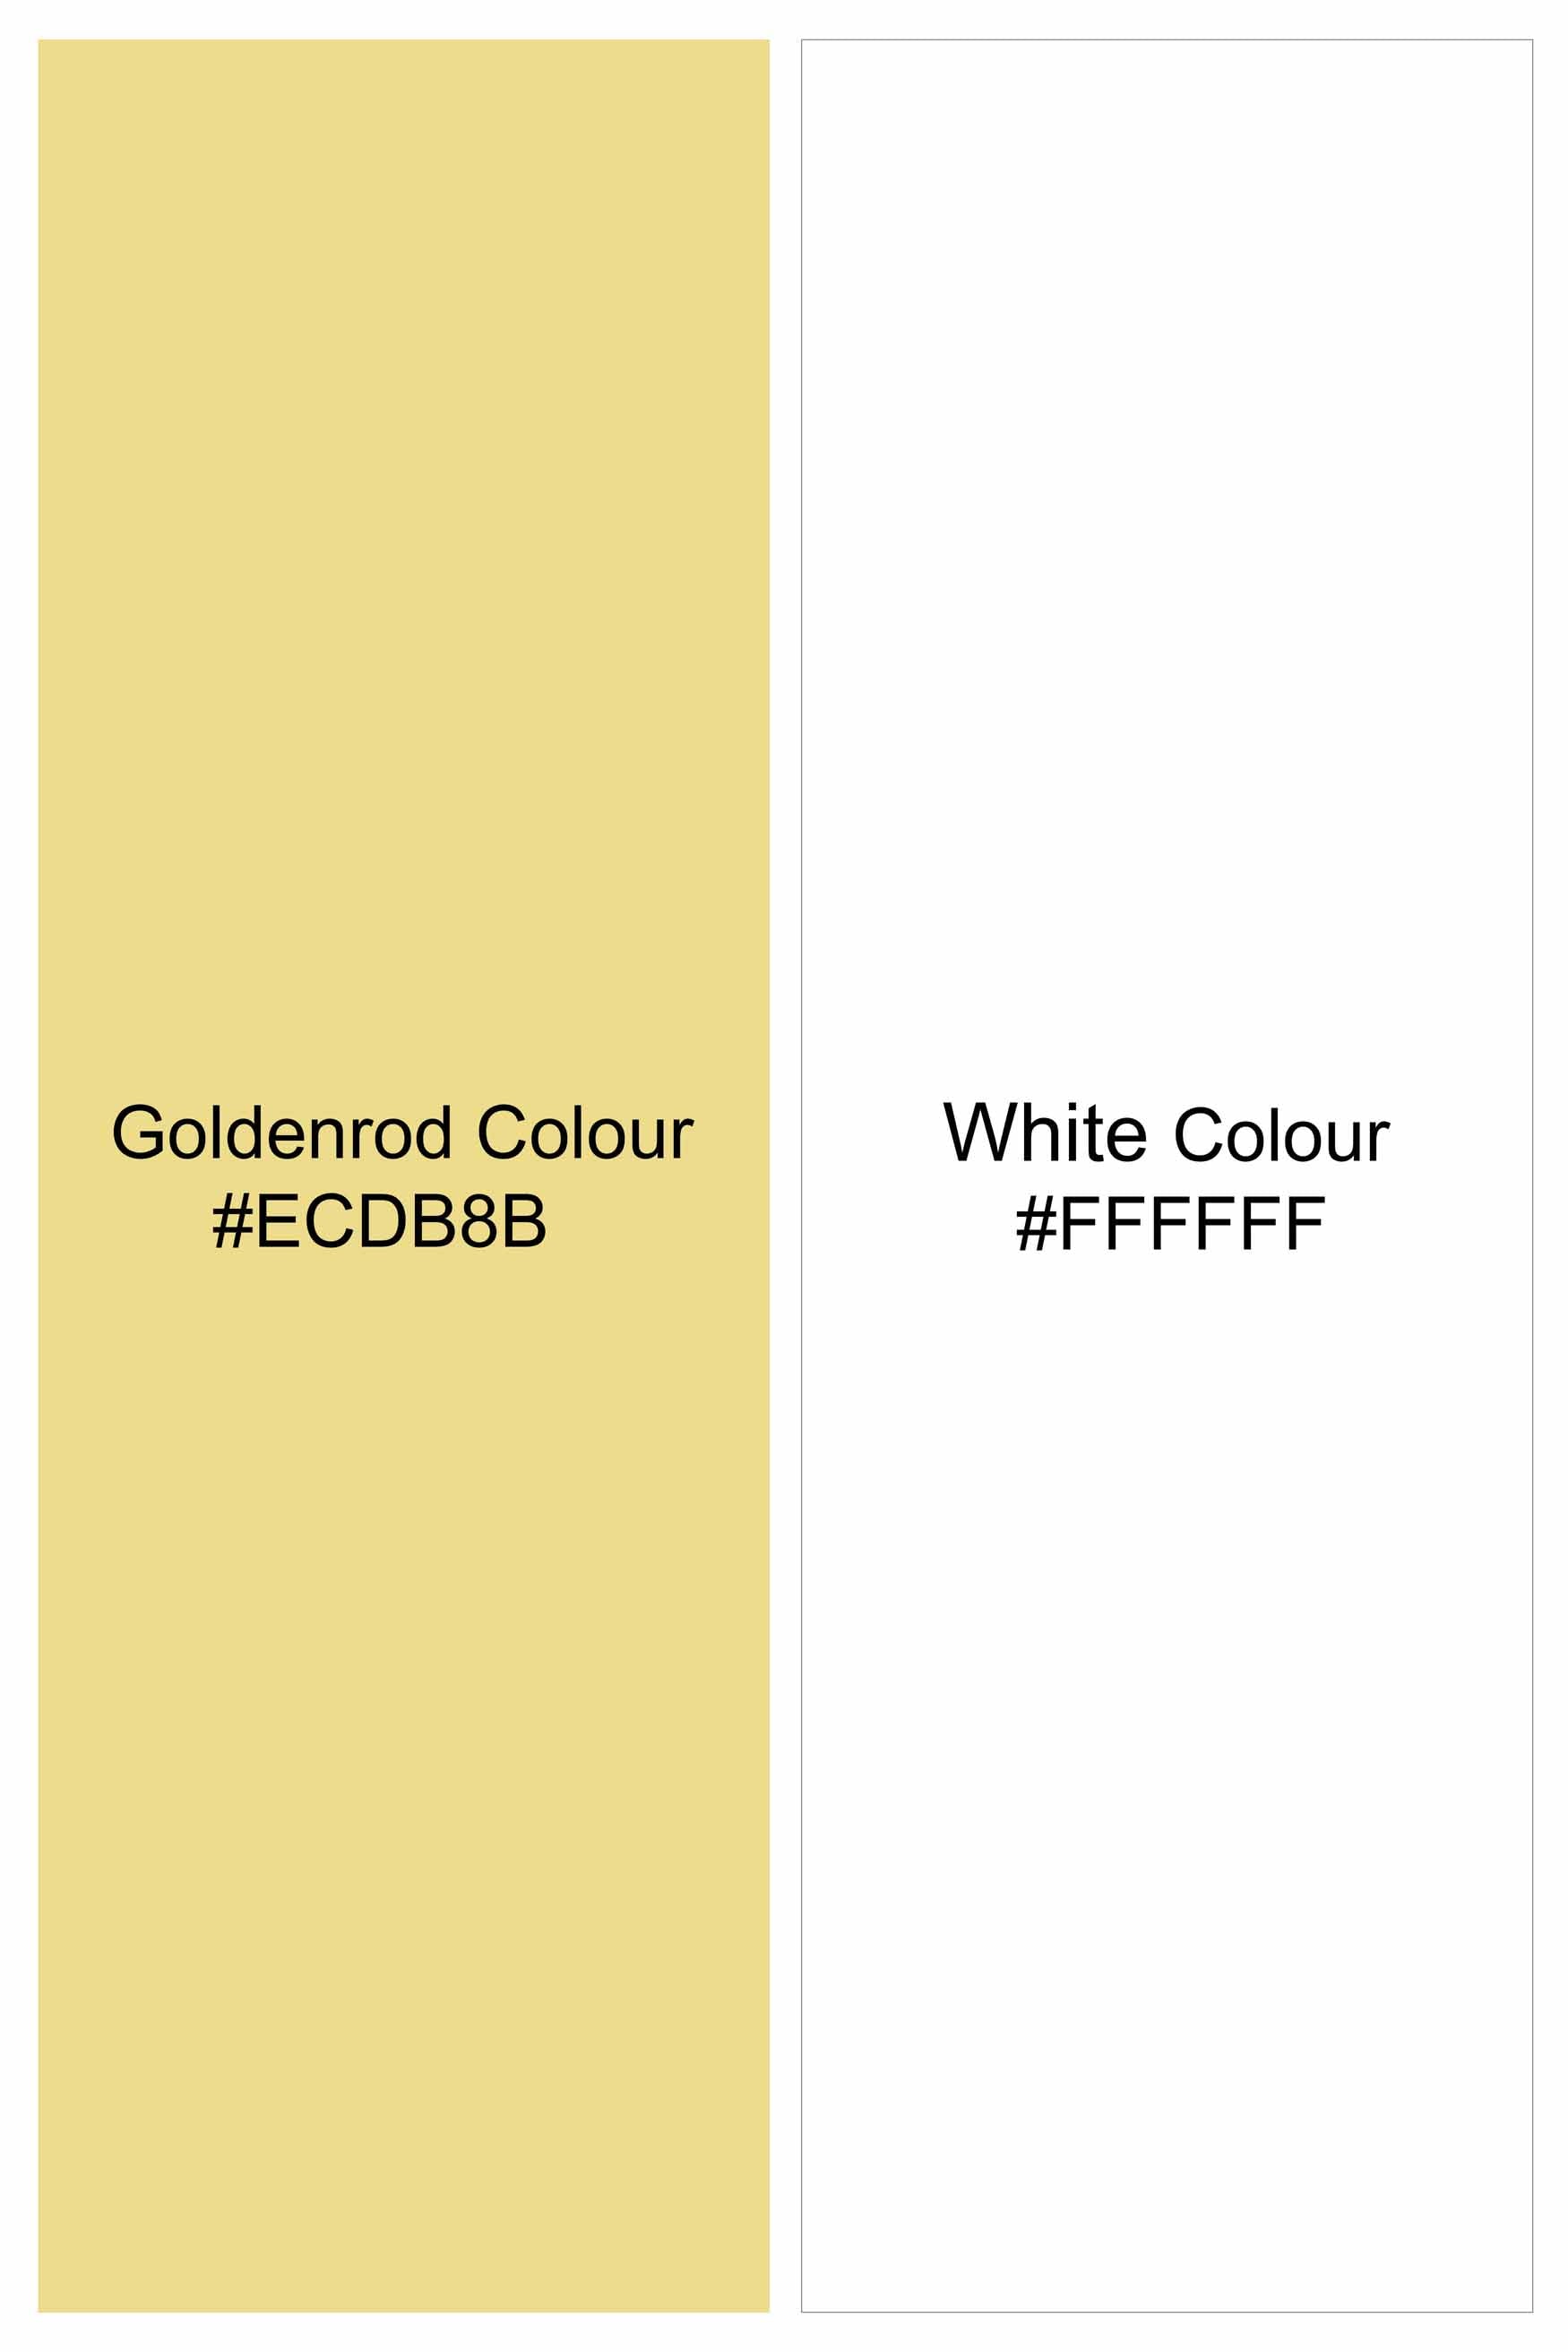 Goldenrod Yellow and White Striped with Face Embroidered Premium Tencel Designer Kurta Shirt 8250-KS-E171-38, 8250-KS-E171-H-38, 8250-KS-E171-39, 8250-KS-E171-H-39, 8250-KS-E171-40, 8250-KS-E171-H-40, 8250-KS-E171-42, 8250-KS-E171-H-42, 8250-KS-E171-44, 8250-KS-E171-H-44, 8250-KS-E171-46, 8250-KS-E171-H-46, 8250-KS-E171-48, 8250-KS-E171-H-48, 8250-KS-E171-50, 8250-KS-E171-H-50, 8250-KS-E171-52, 8250-KS-E171-H-52